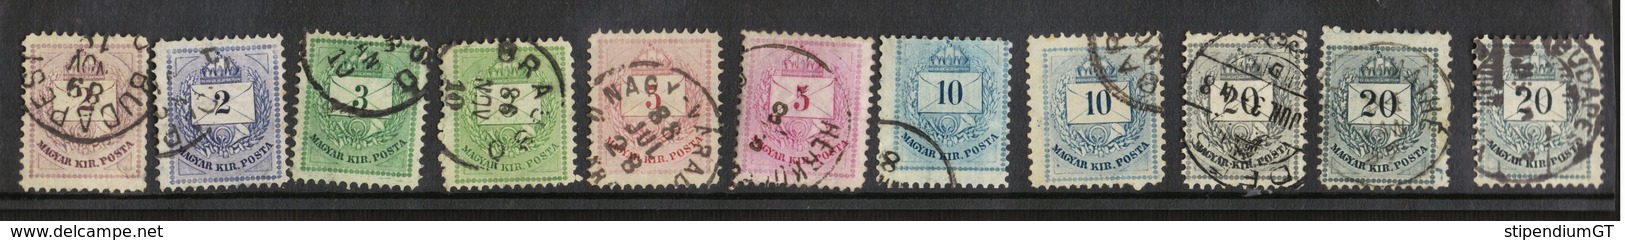 HUNGARY  1881 SZÍNESSZÁMÚ KRAJCÁROS Wmk I. Perforation  11 1/2  Used - Used Stamps